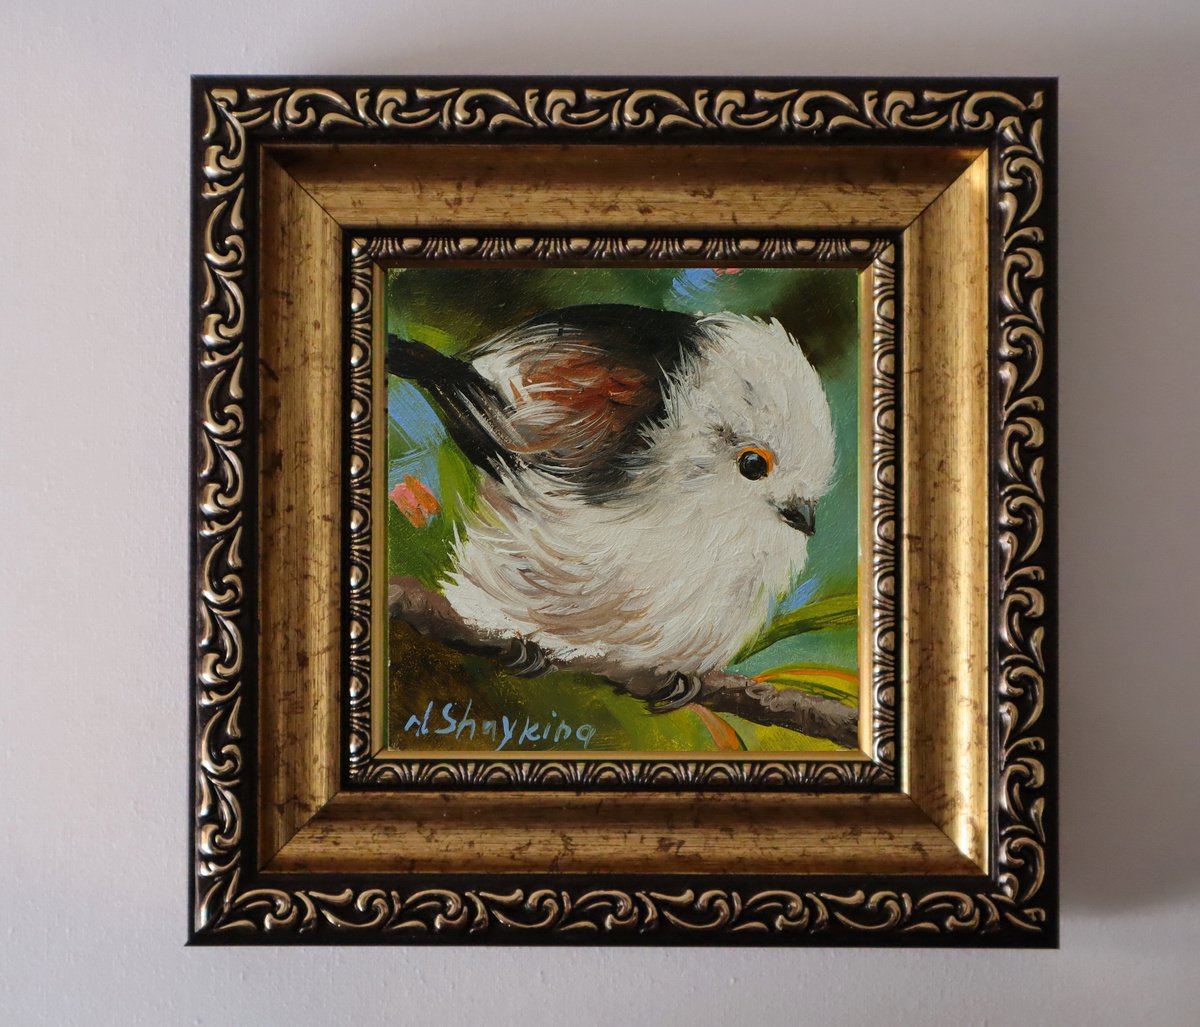 Bird - Silver-throated Bushtit - Original Art of Oil Painting 4x4, Animal Wildlife by Natalia Shaykina